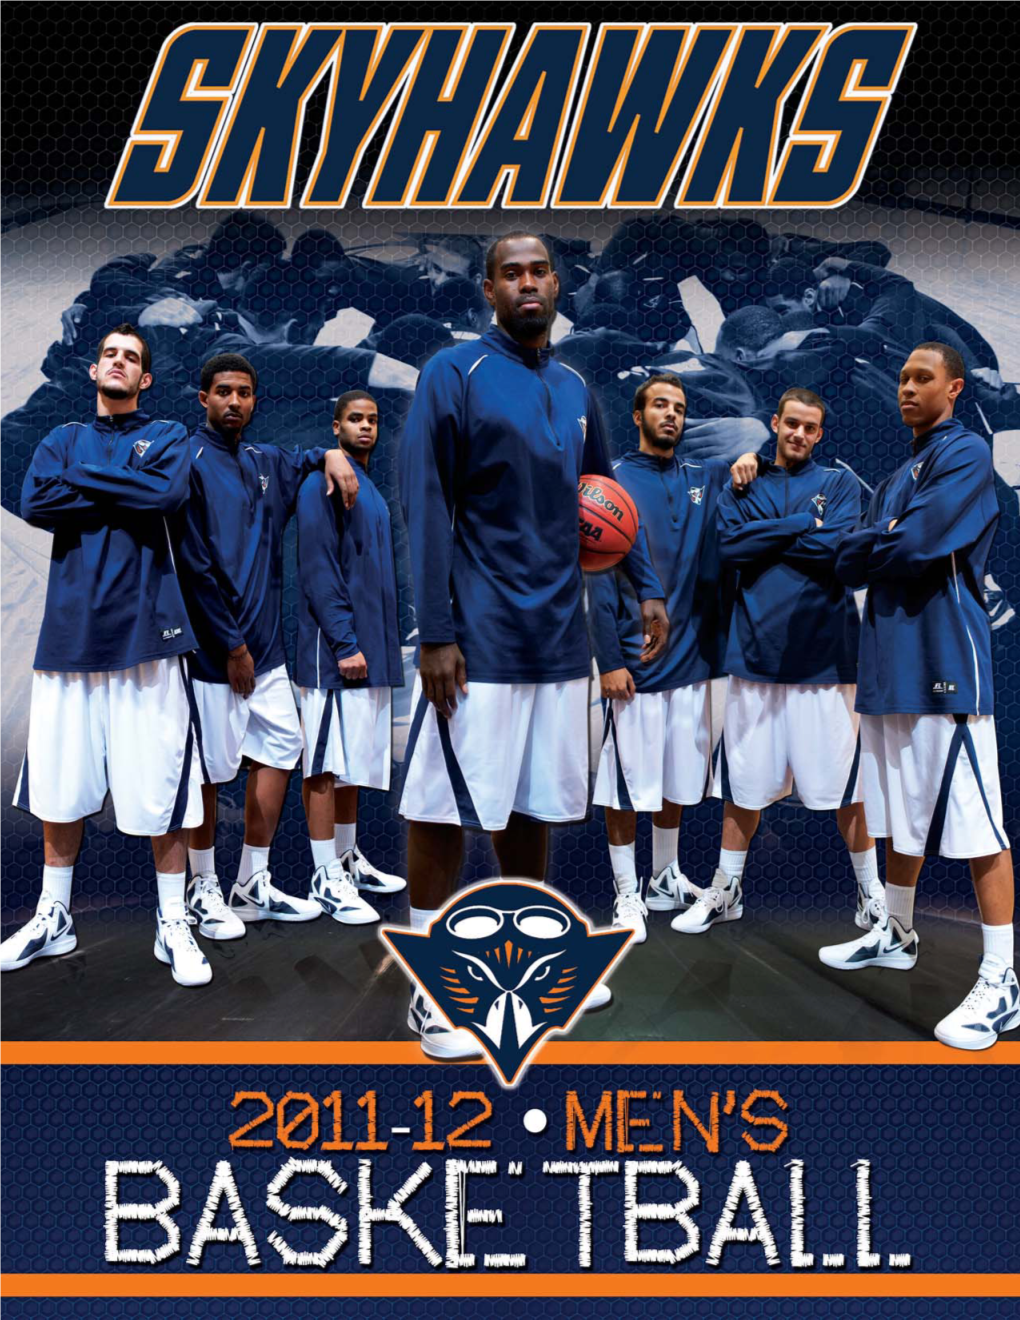 2011-12 Skyhawk Men's Basketball